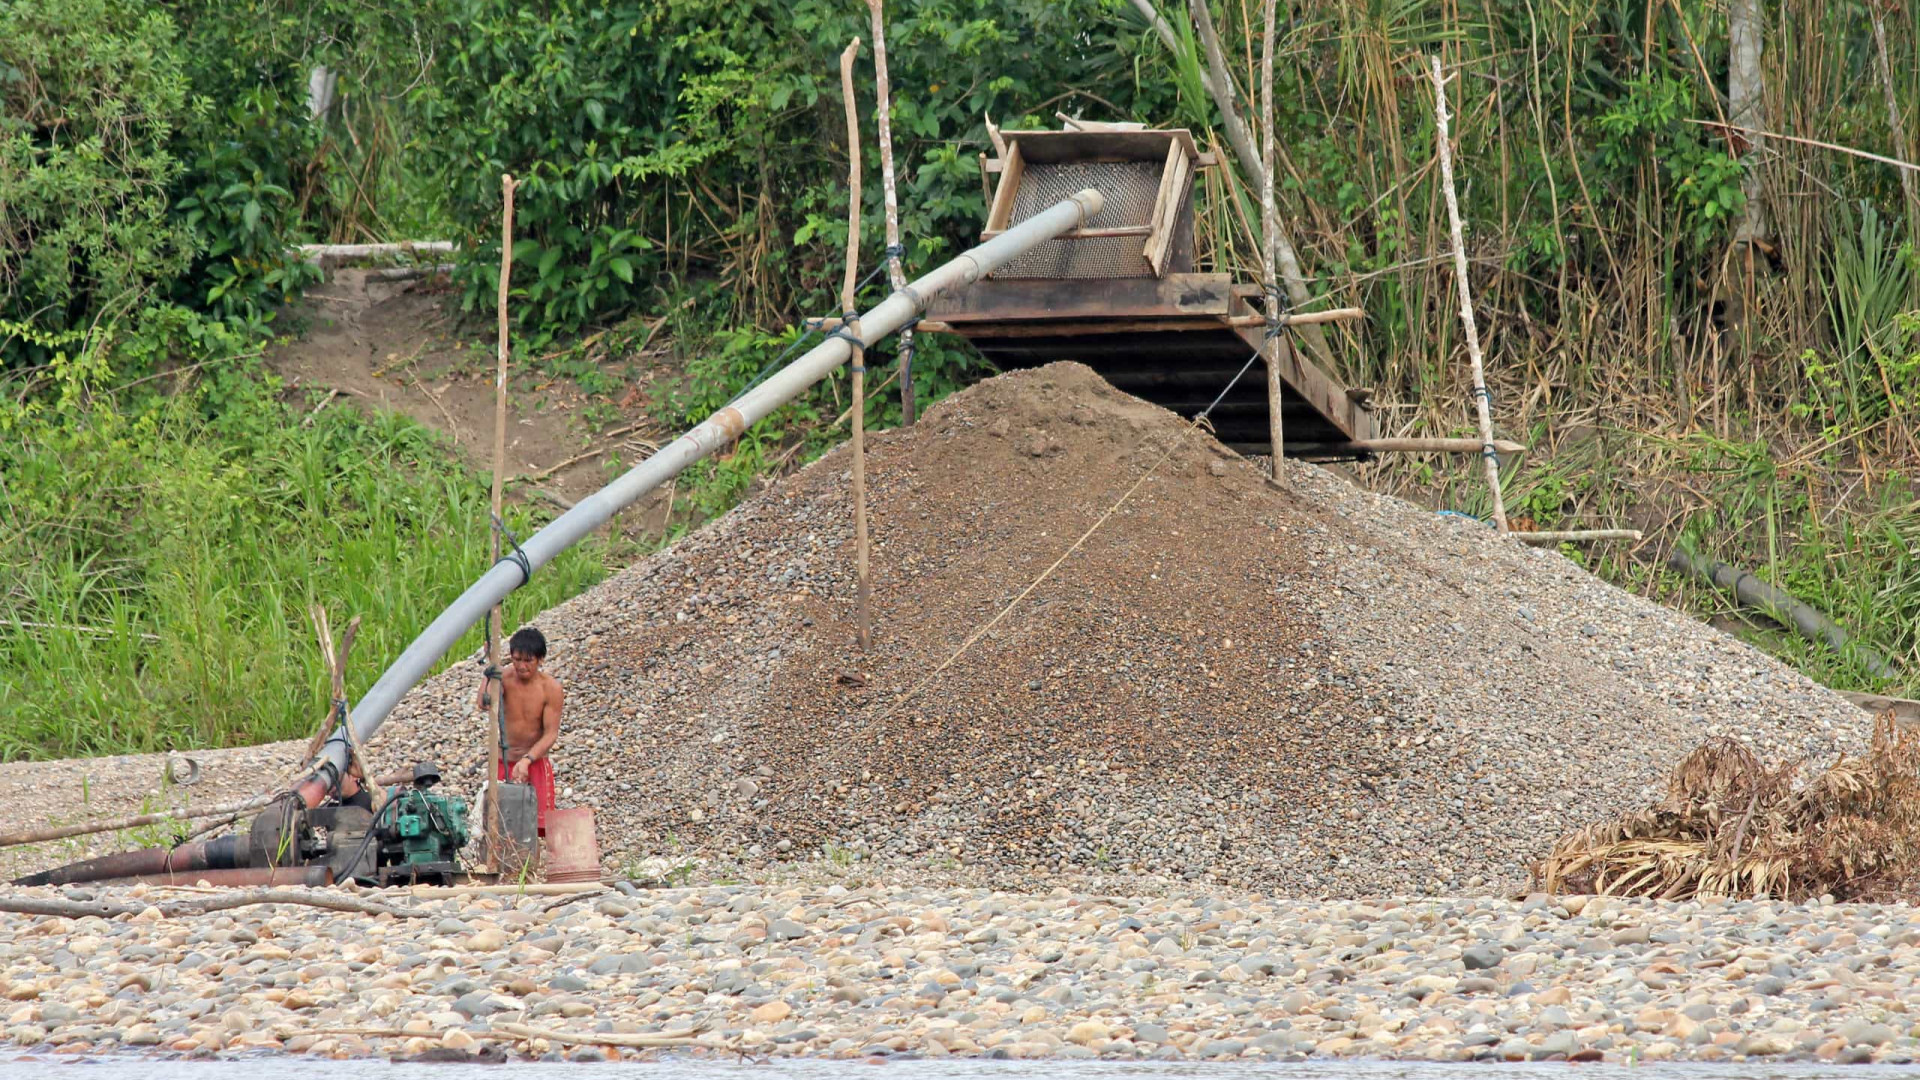 Mercúrio de garimpo ilegal contamina índios, diz pesquisa